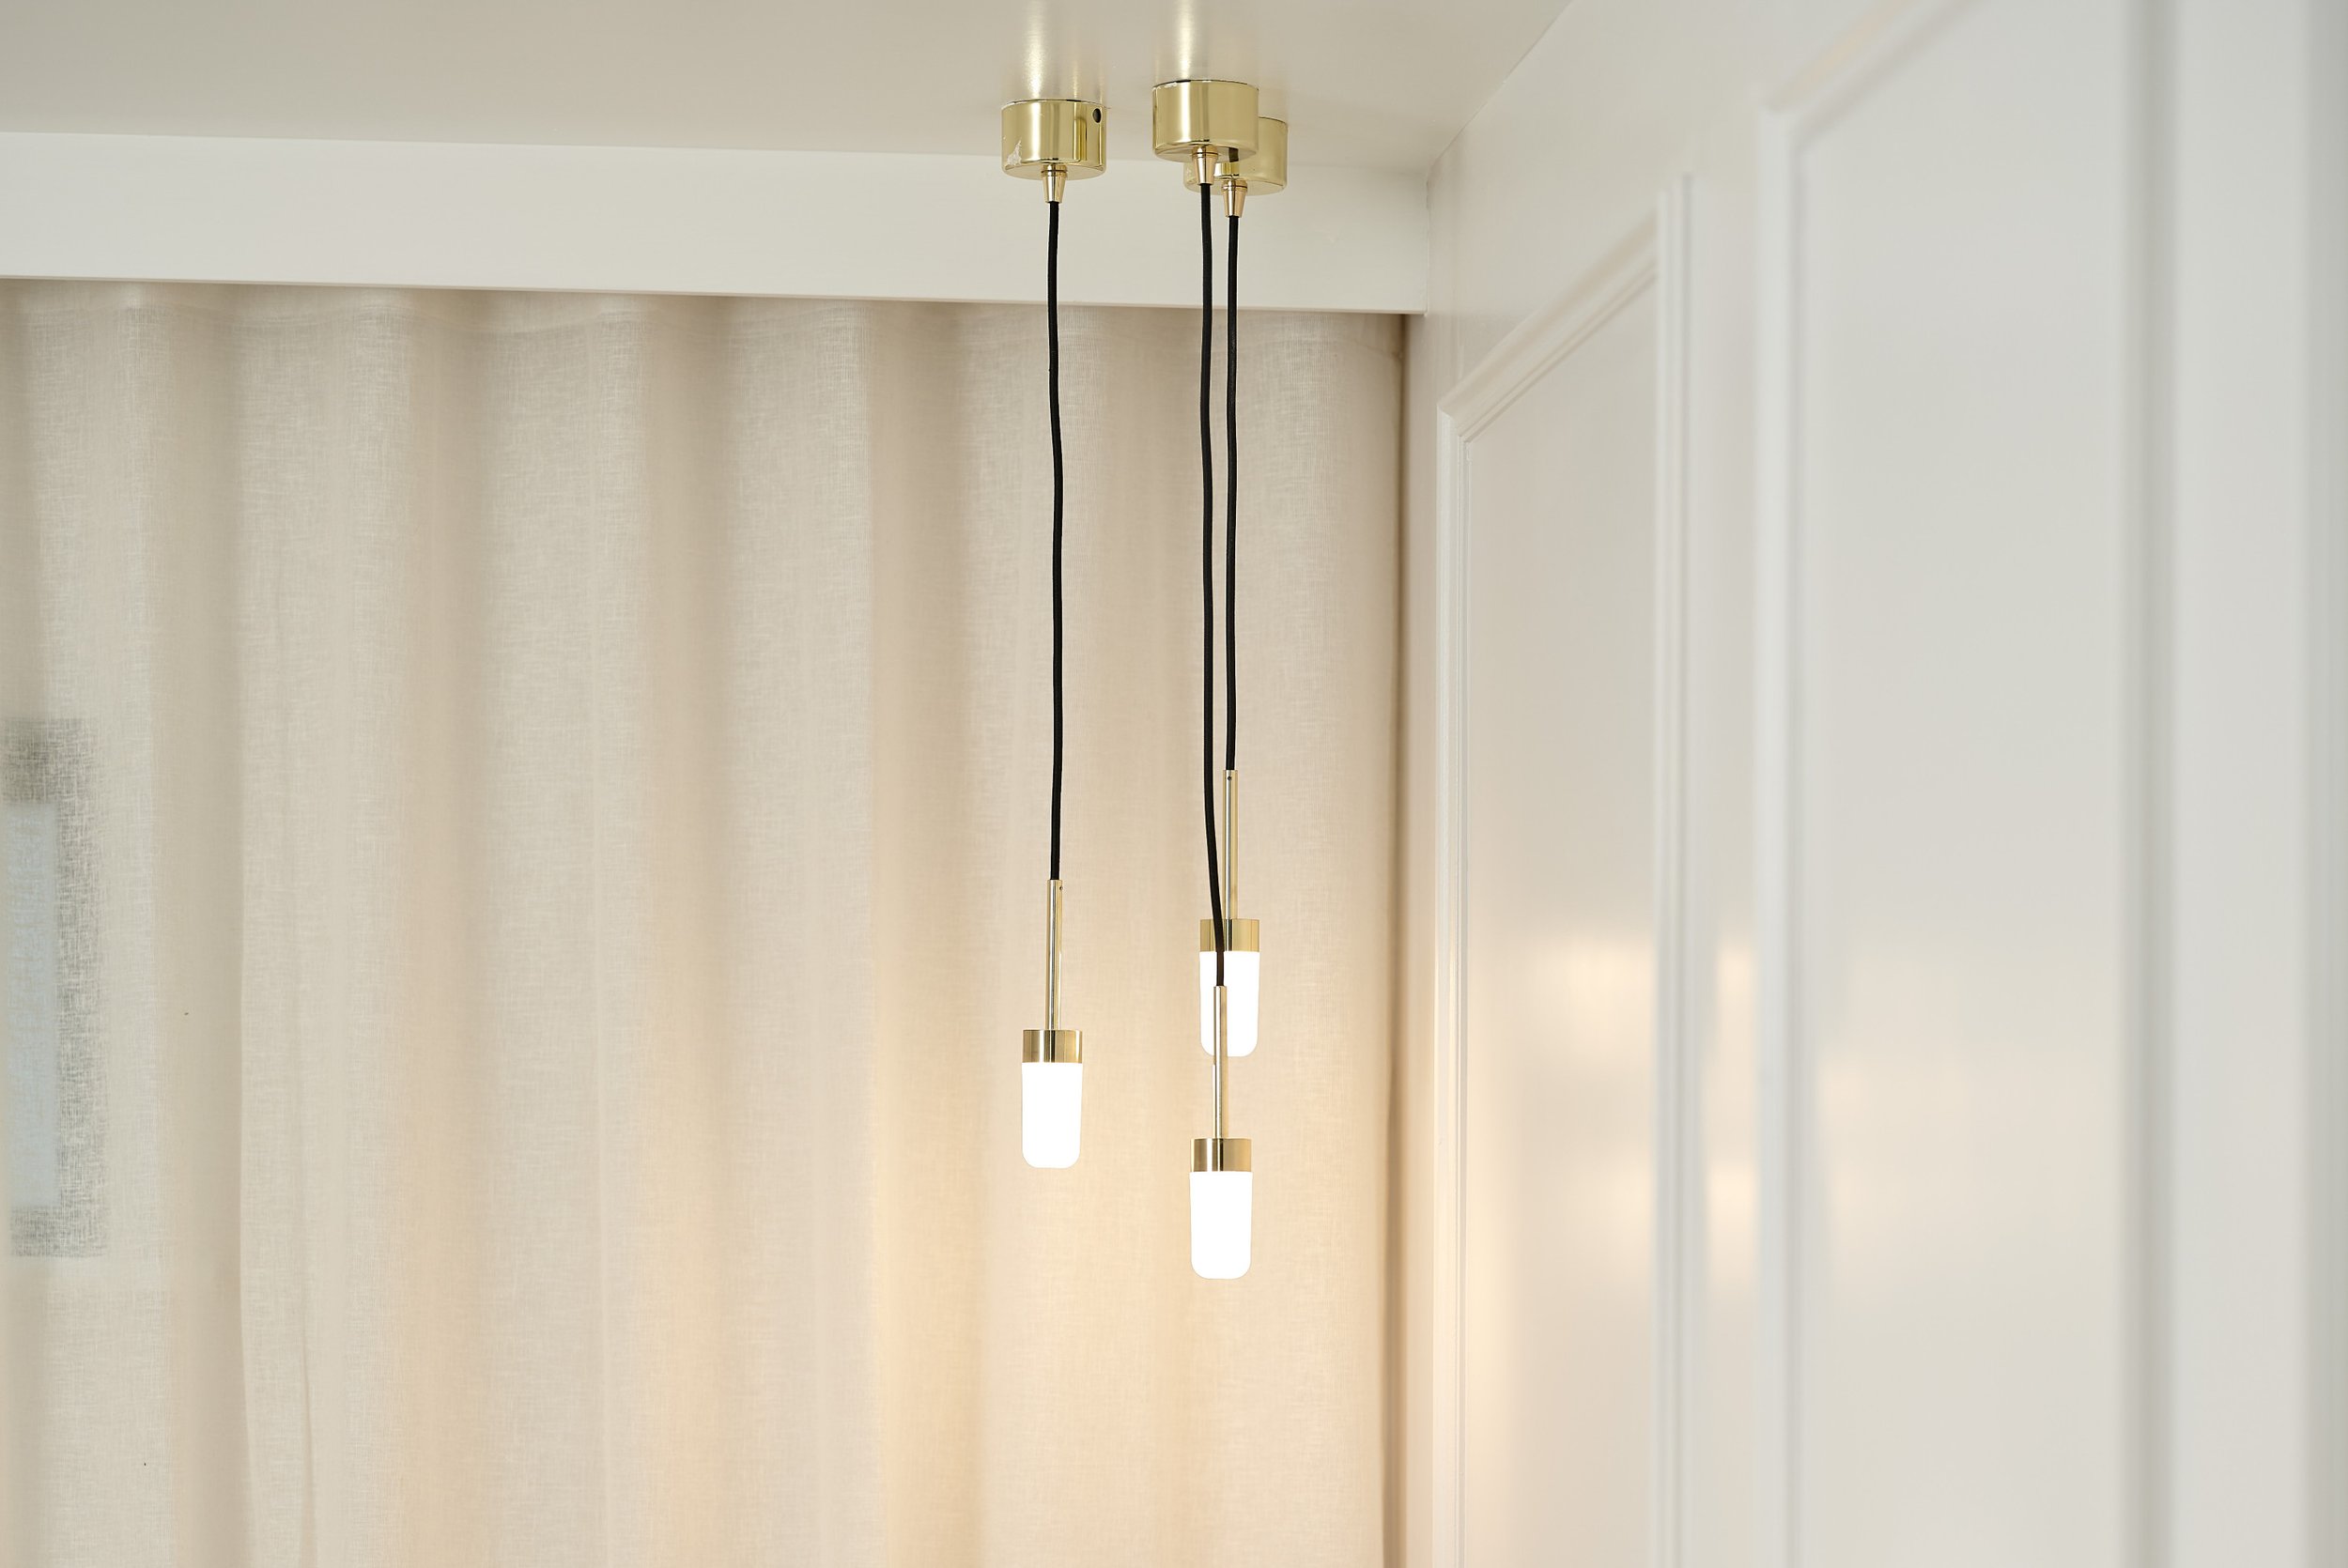 hanging-pendant-lights-in-ripples-bathroom.jpg